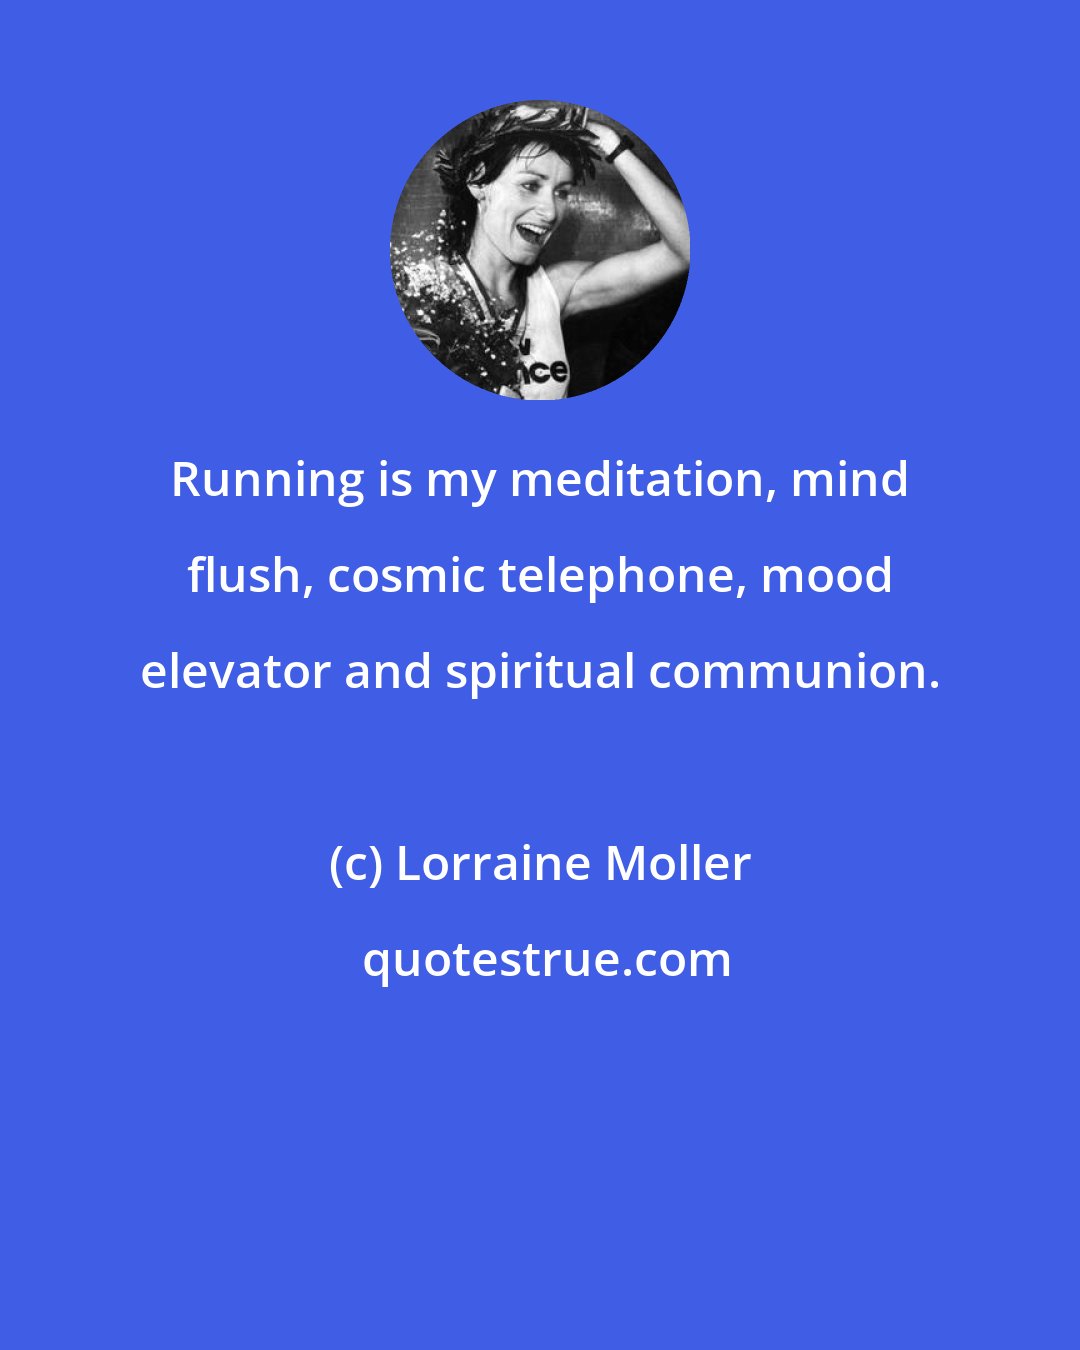 Lorraine Moller: Running is my meditation, mind flush, cosmic telephone, mood elevator and spiritual communion.